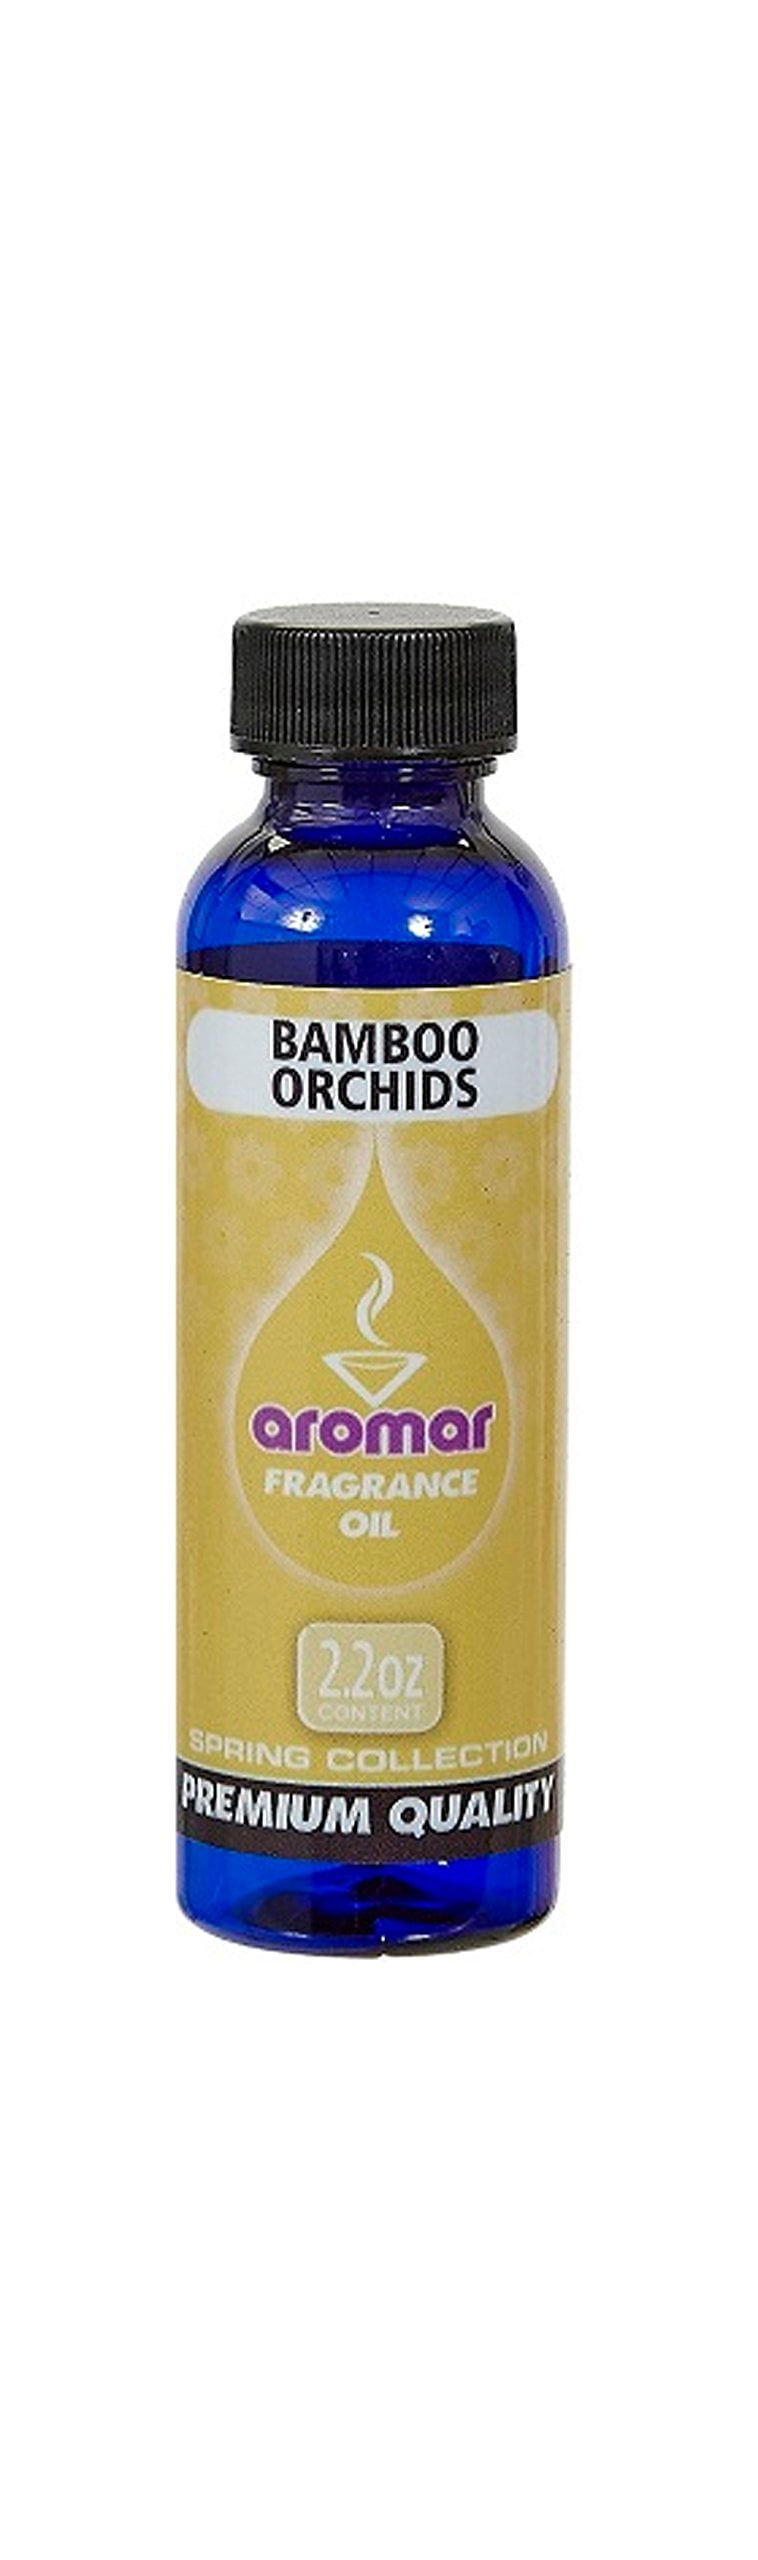 Aromar Fragrance Oil, 2.2 oz.